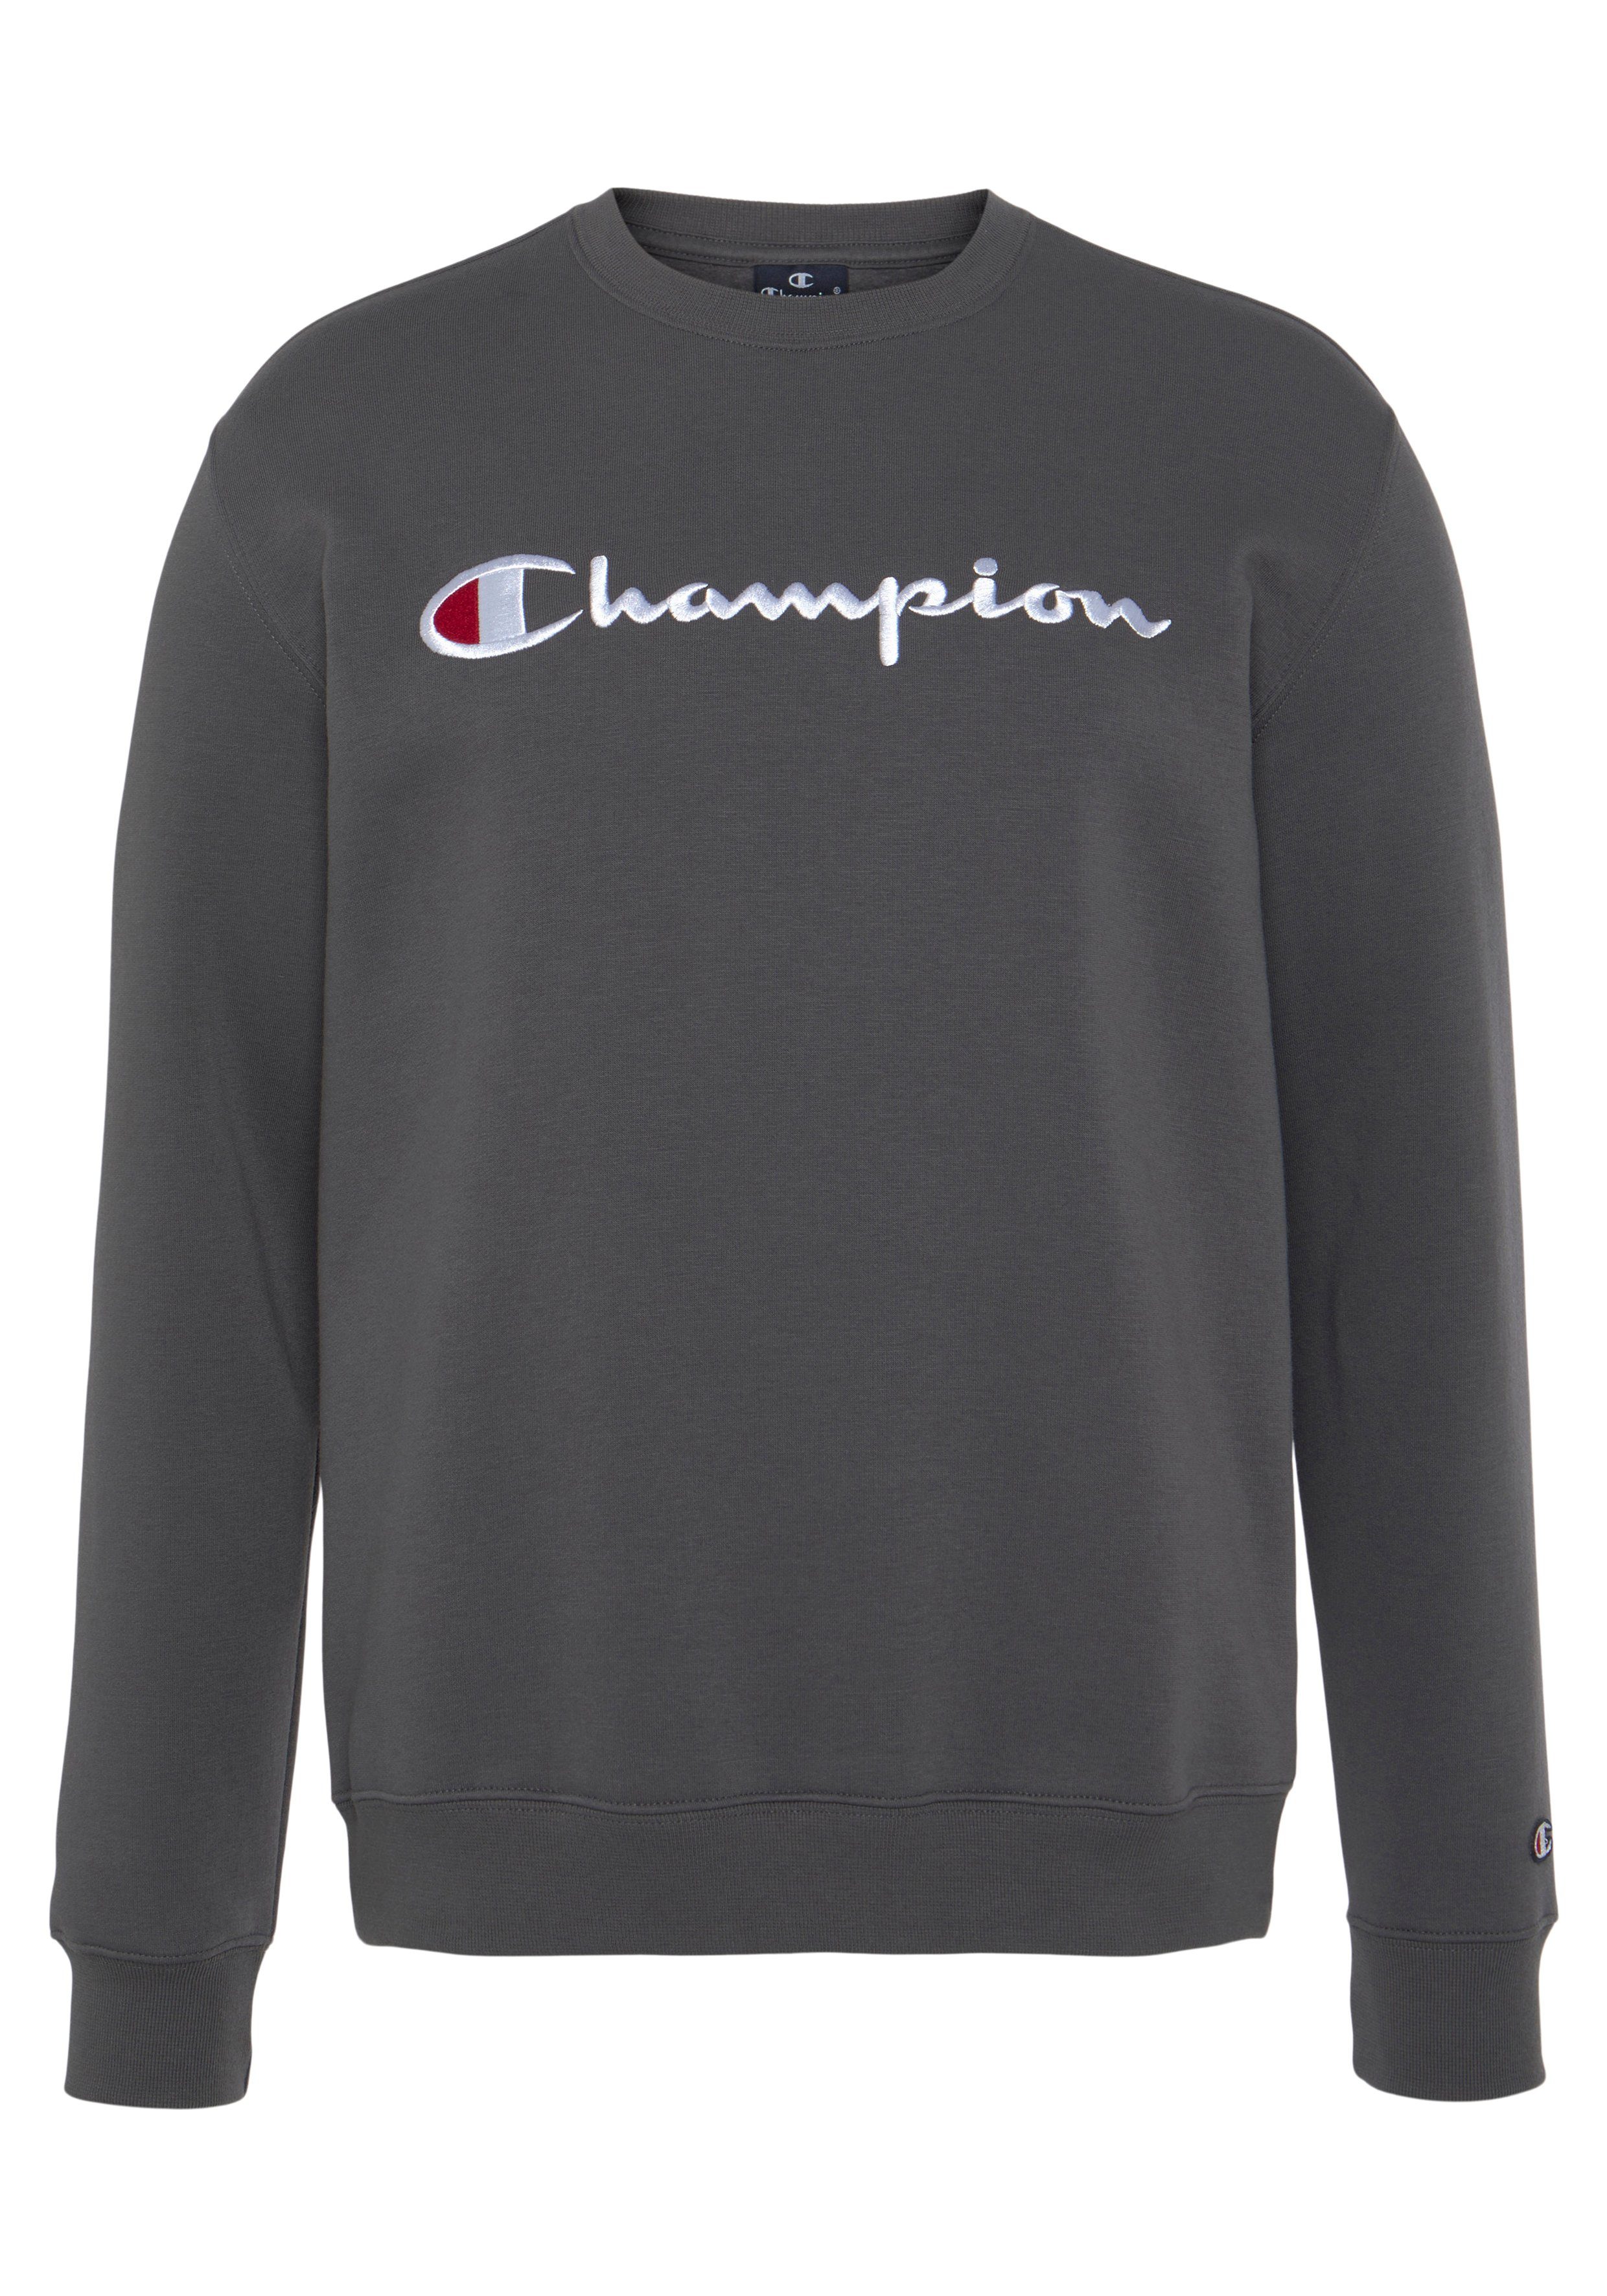 Champion Sweatshirt Classic Crewneck Sweatshirt large l grau